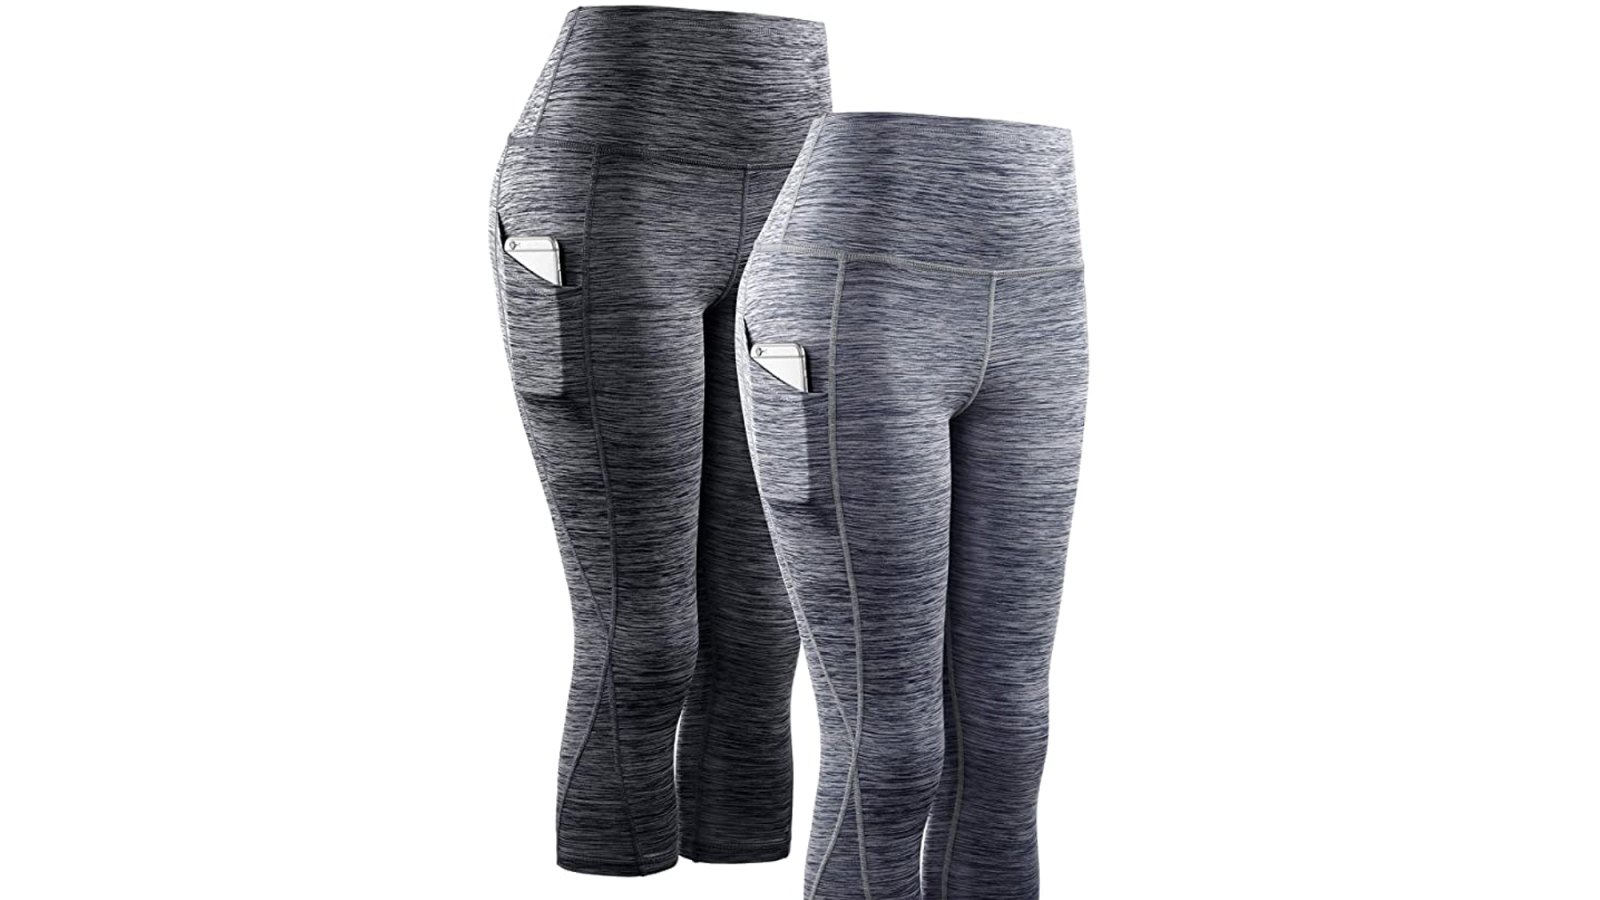 NELEUS Women's Yoga Leggings Tummy Control Workout Running Pants